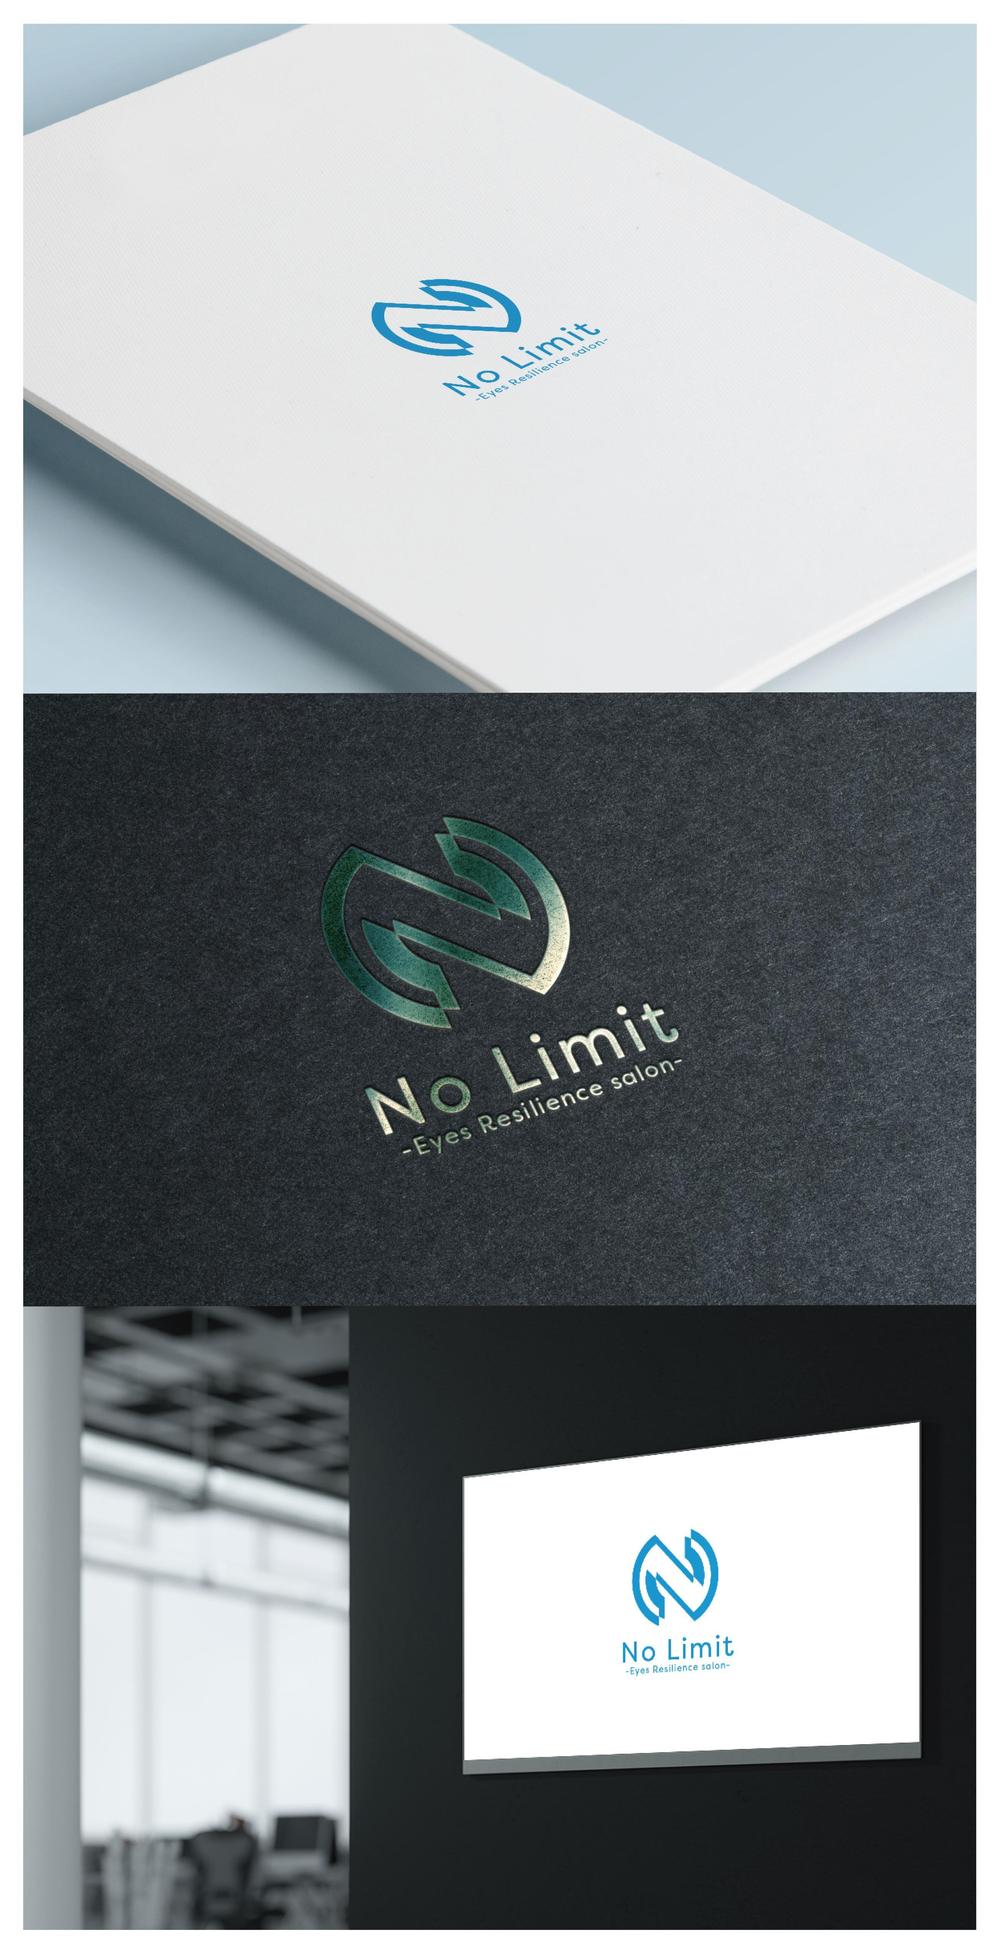 No Limit_logo01_01.jpg